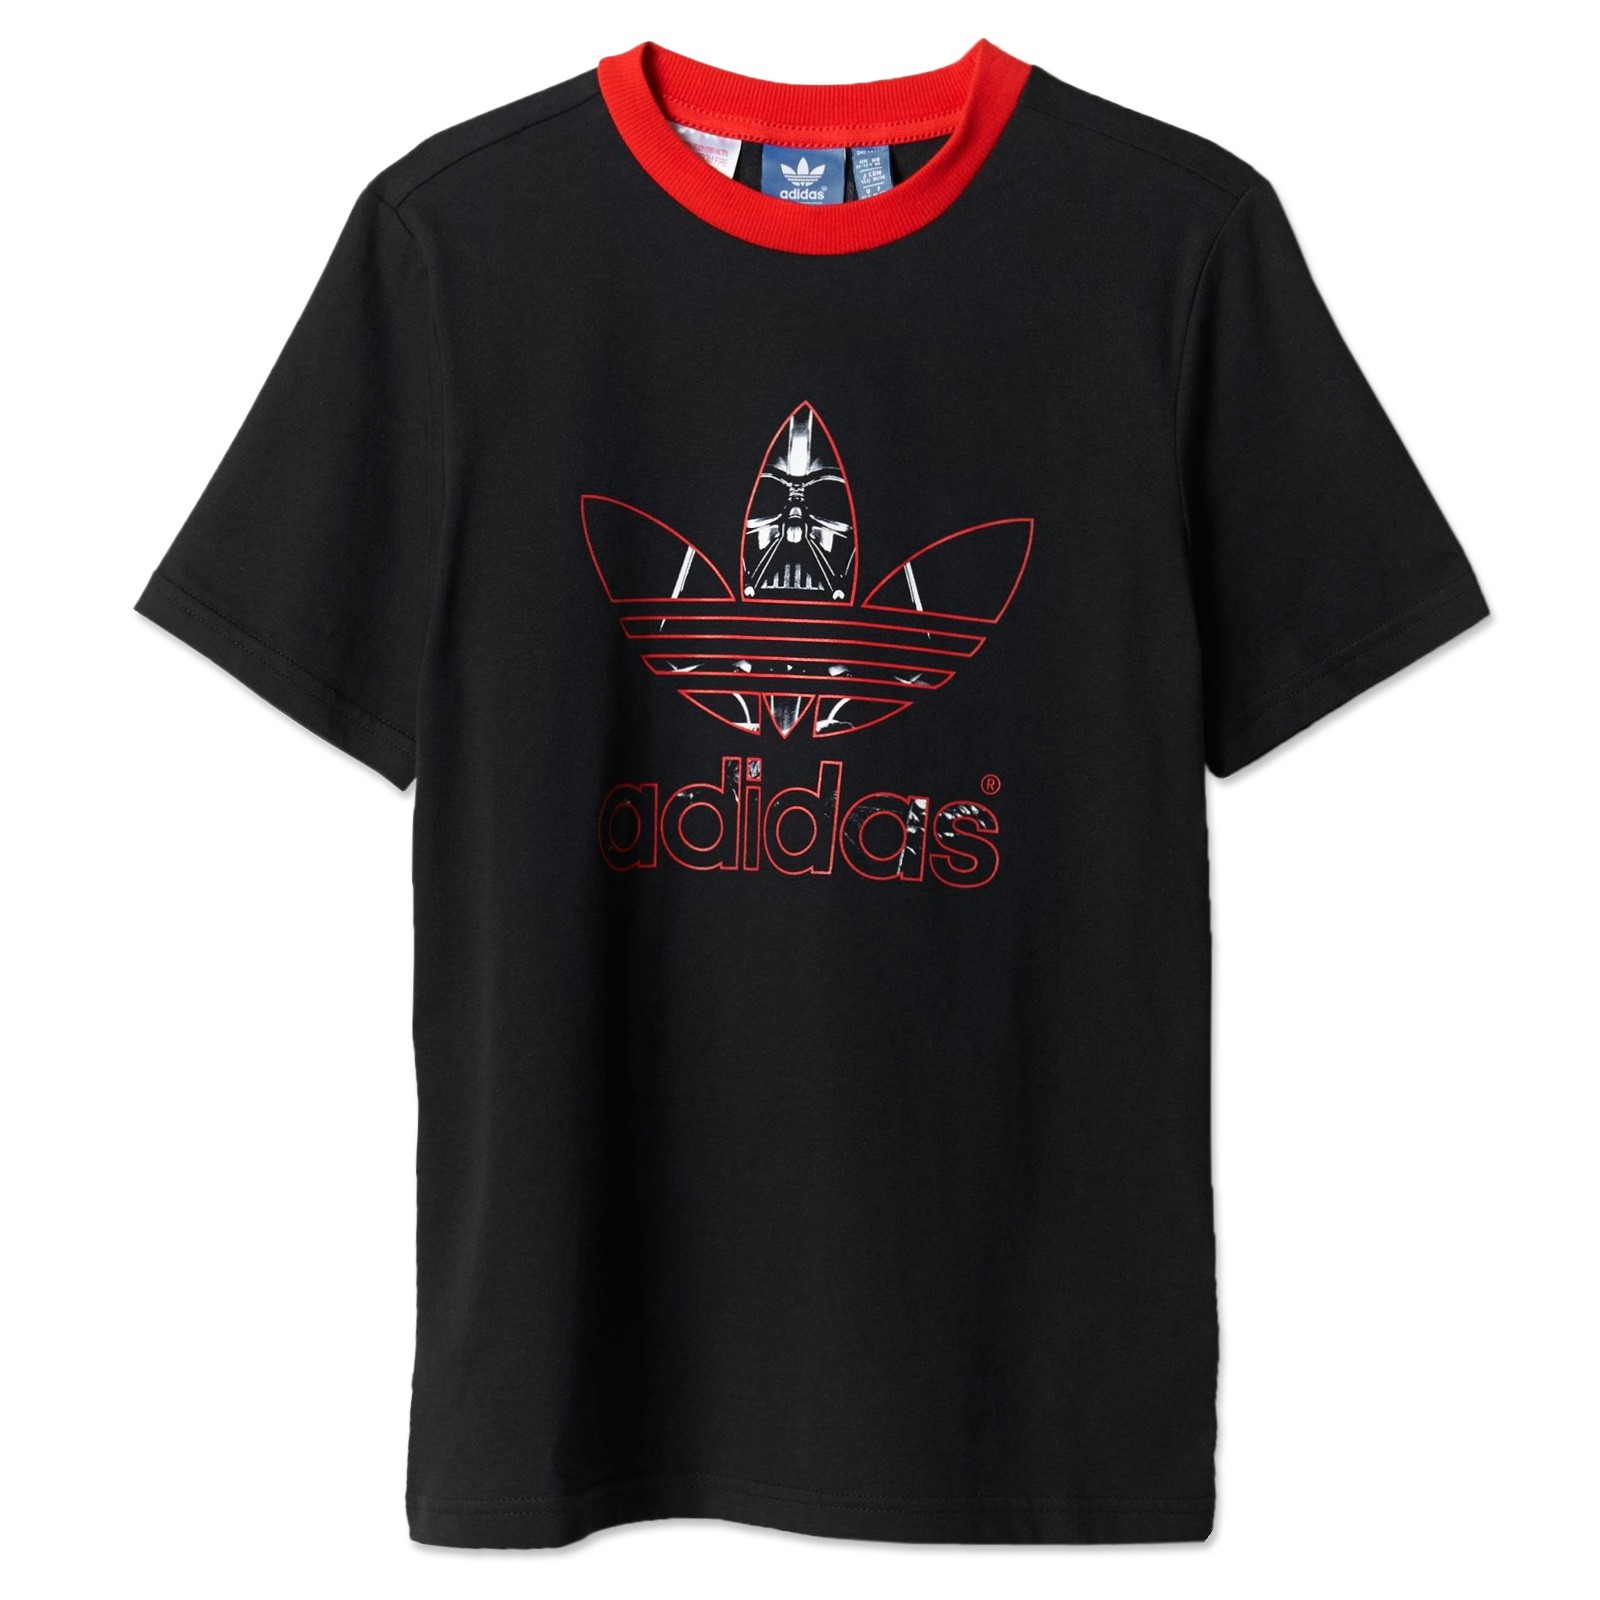 Adidas Originals Star Wars Bambini Ragazzi T-Shirt Darth Vader tee Nero Rot  104 | eBay